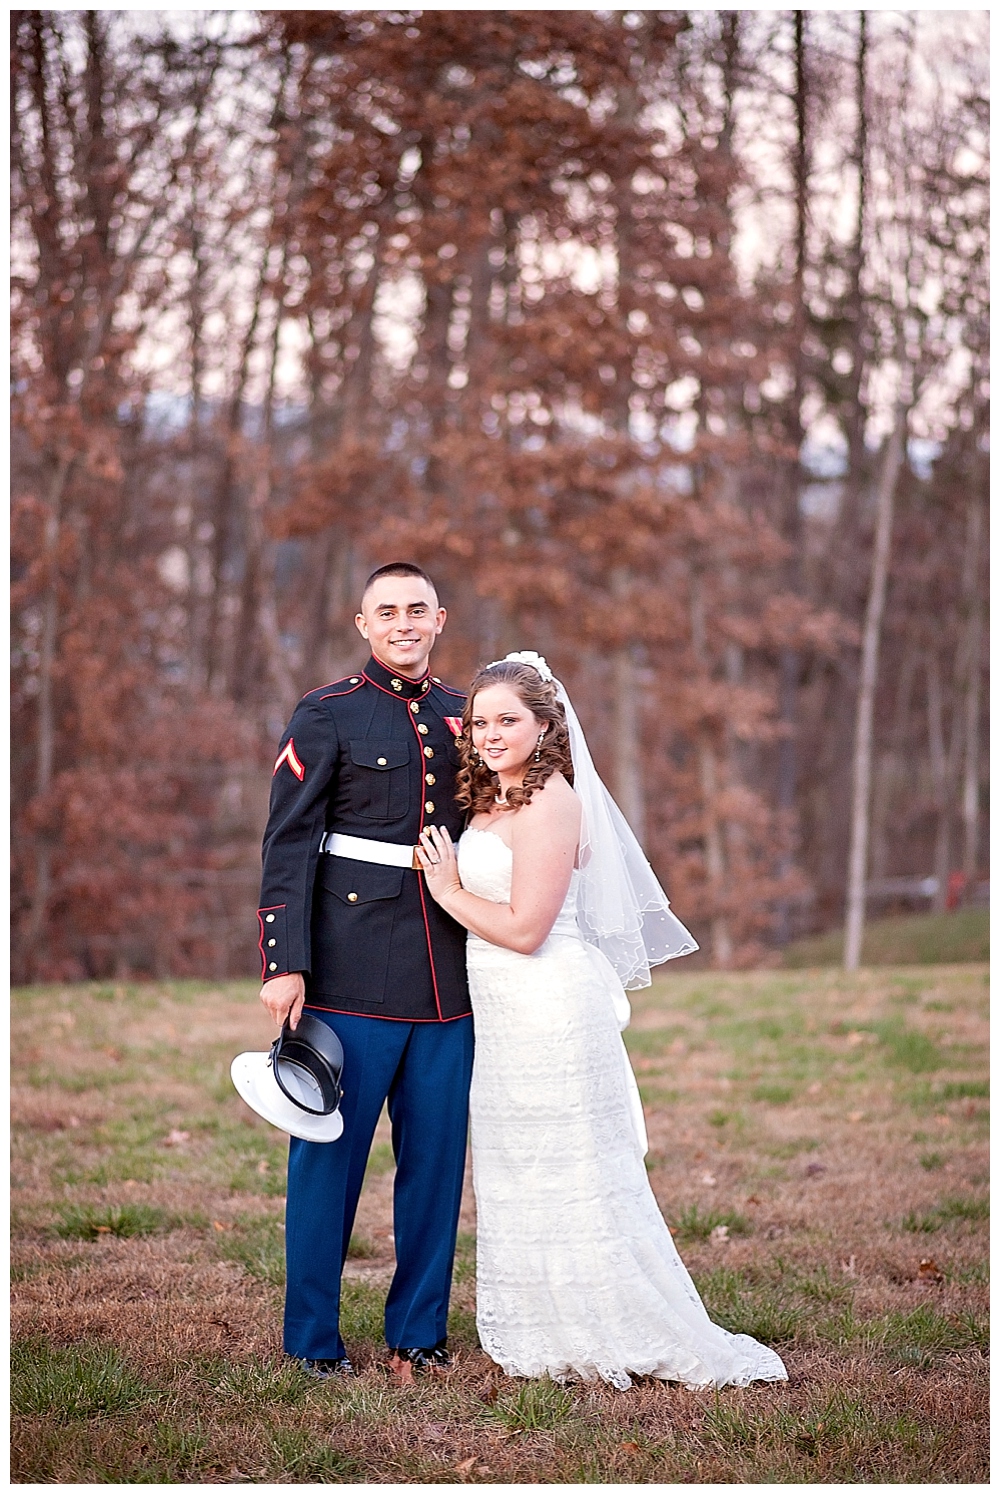 Marine corps dress blues wedding